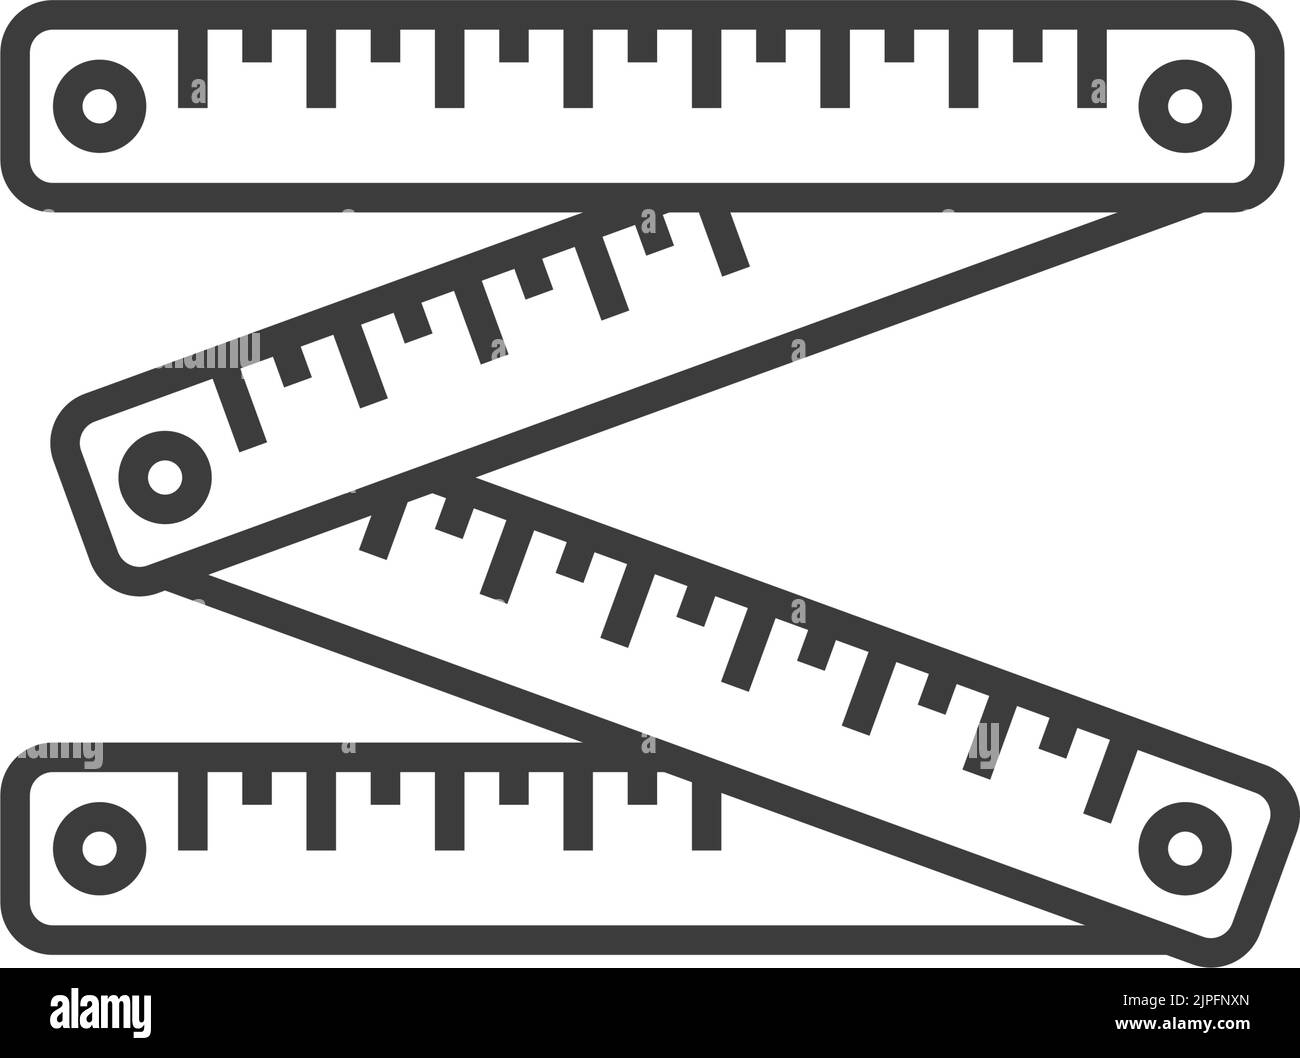 Centimeter folding measure ruler Stock Vector Images - Alamy